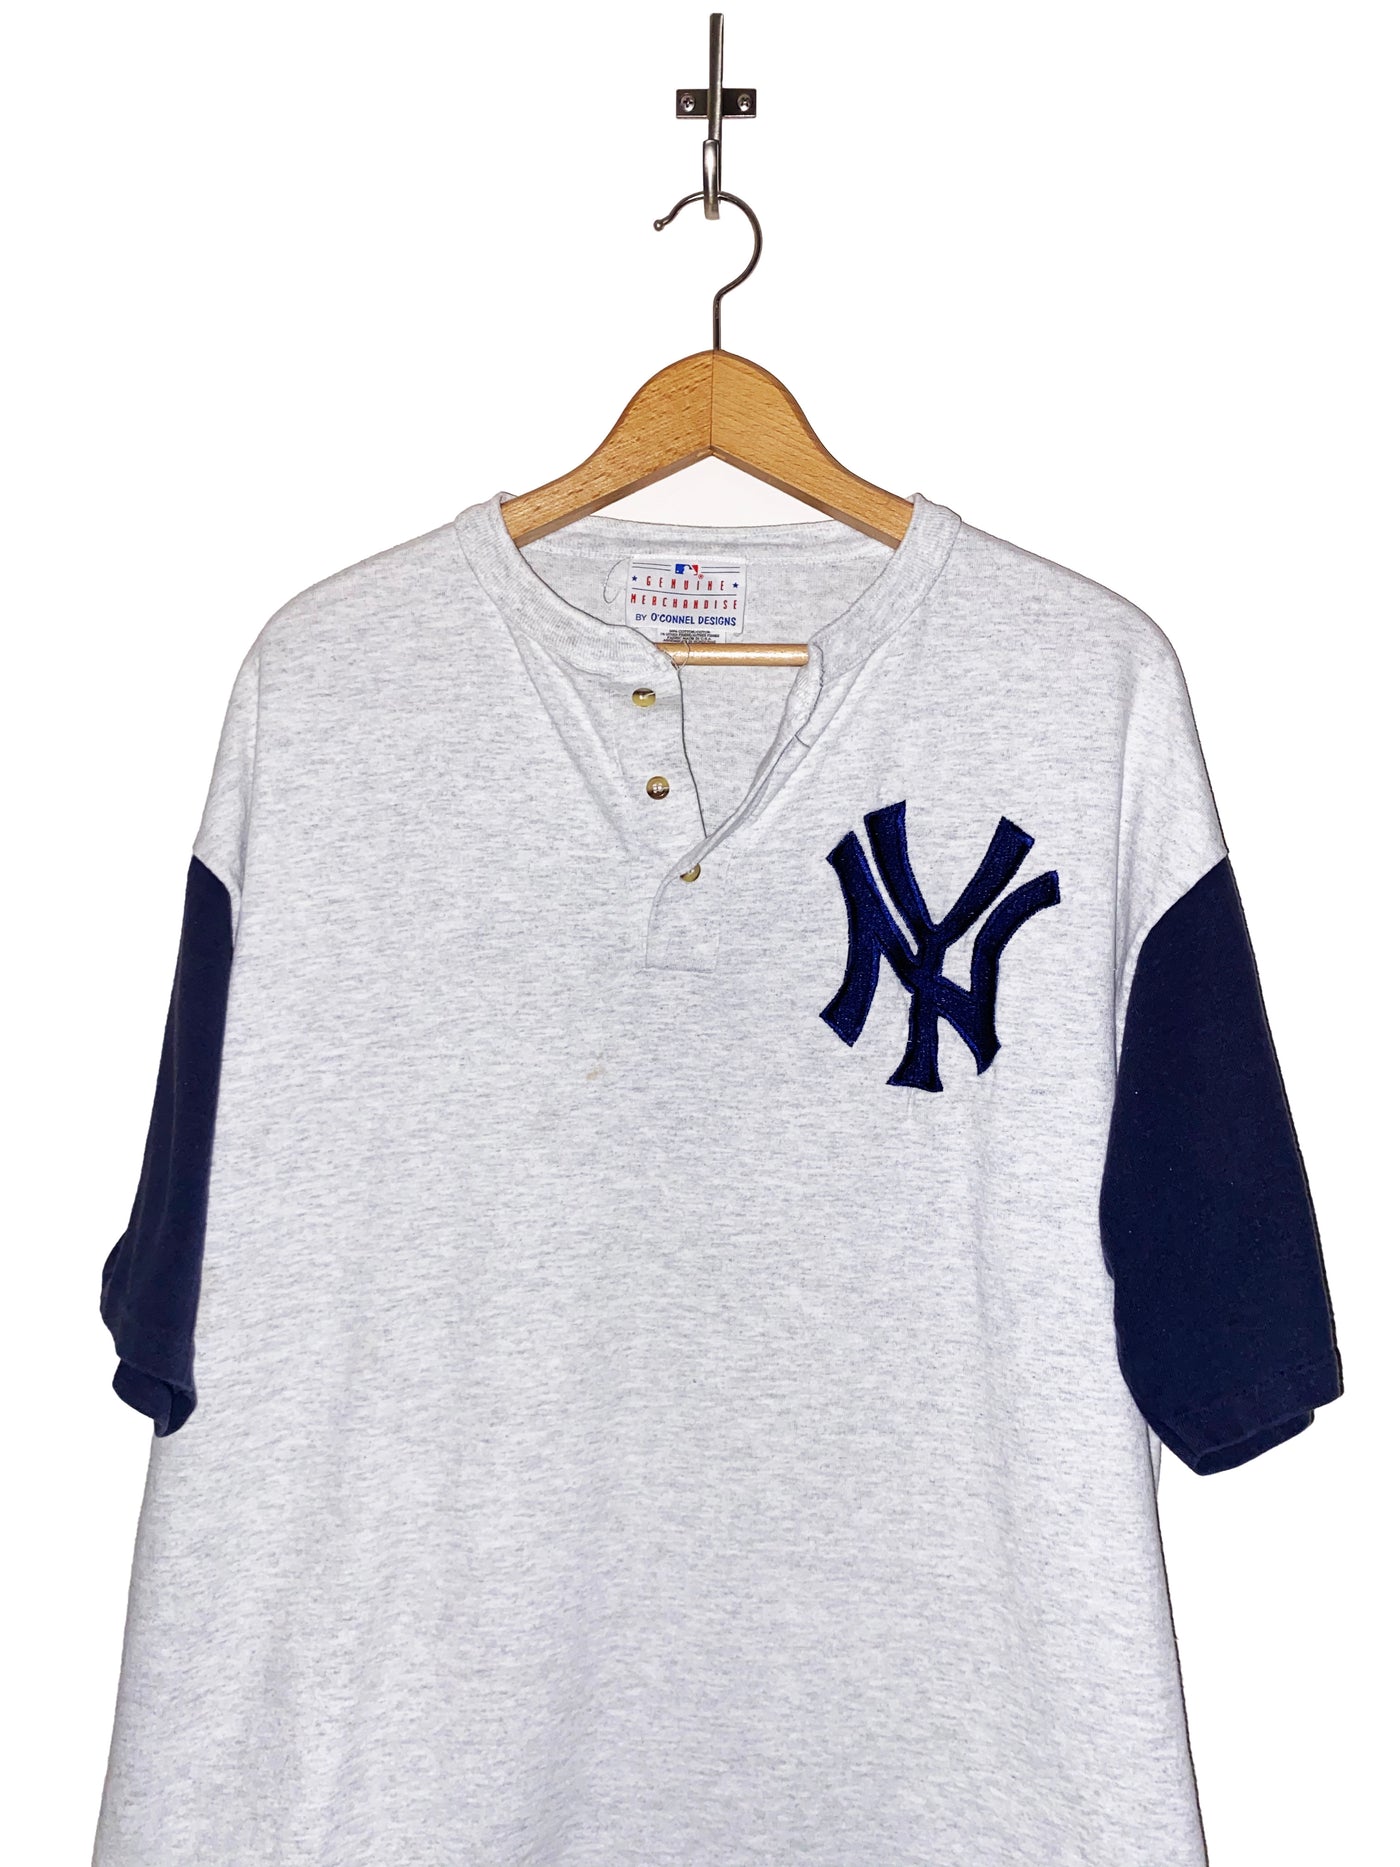 Vintage 80s NY Yankees Henley T-Shirt